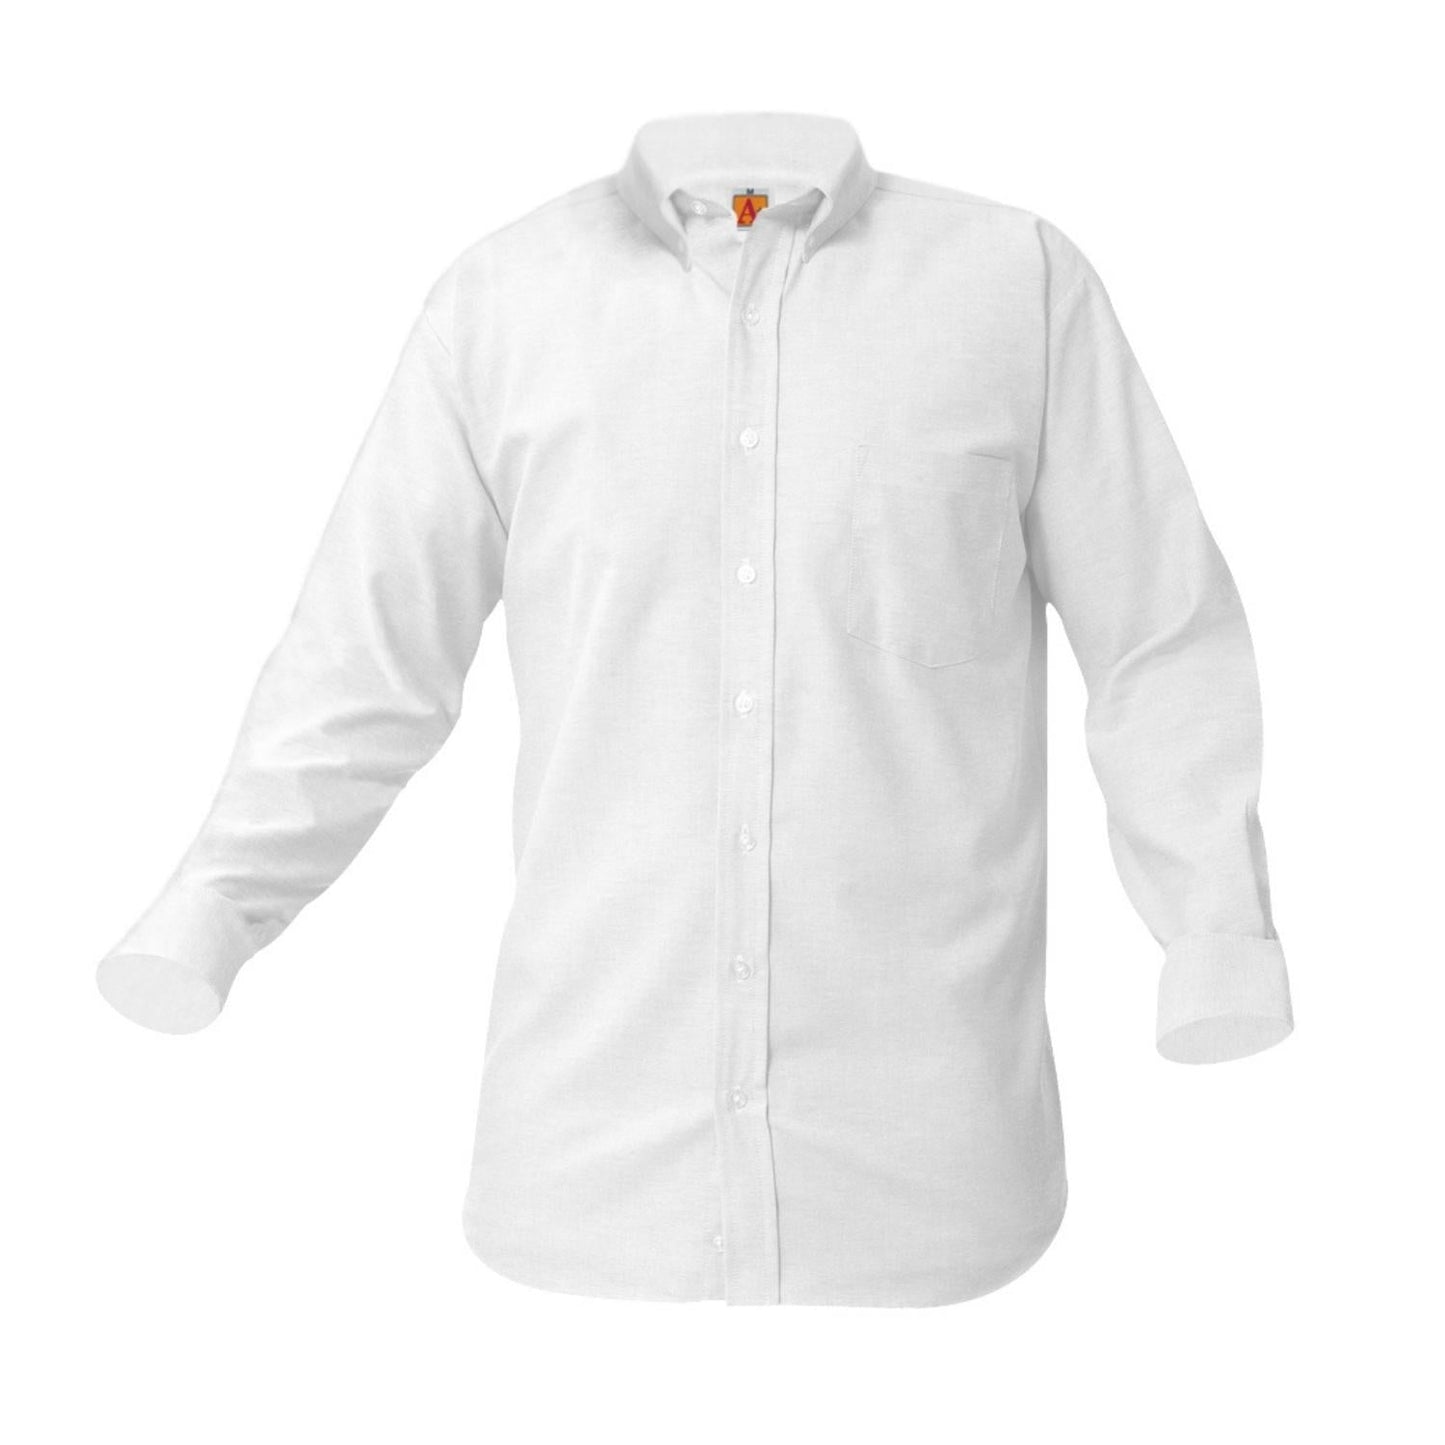 Oxford Long Sleeve Shirt (Male) w/Logo - 1100